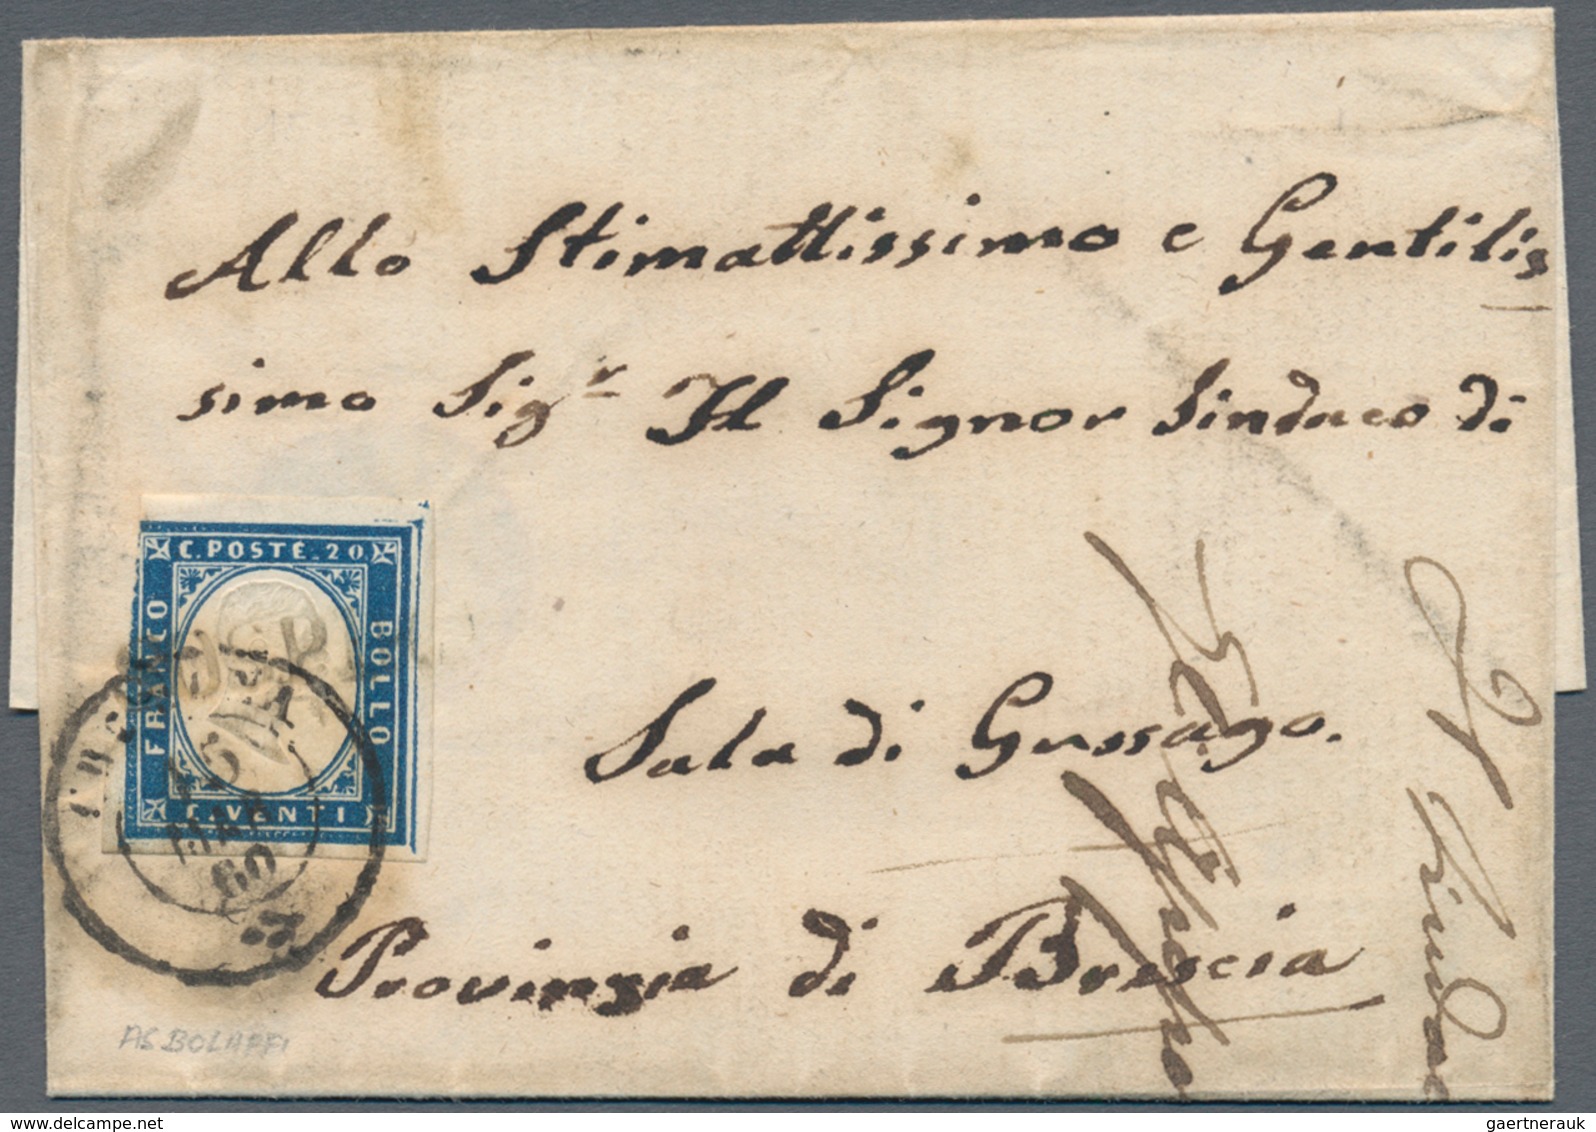 00846 Italien - Altitalienische Staaten: Sardinien: 1860: SOSPIRO, Rare Austrian Post Mark In Block Letter - Sardinien